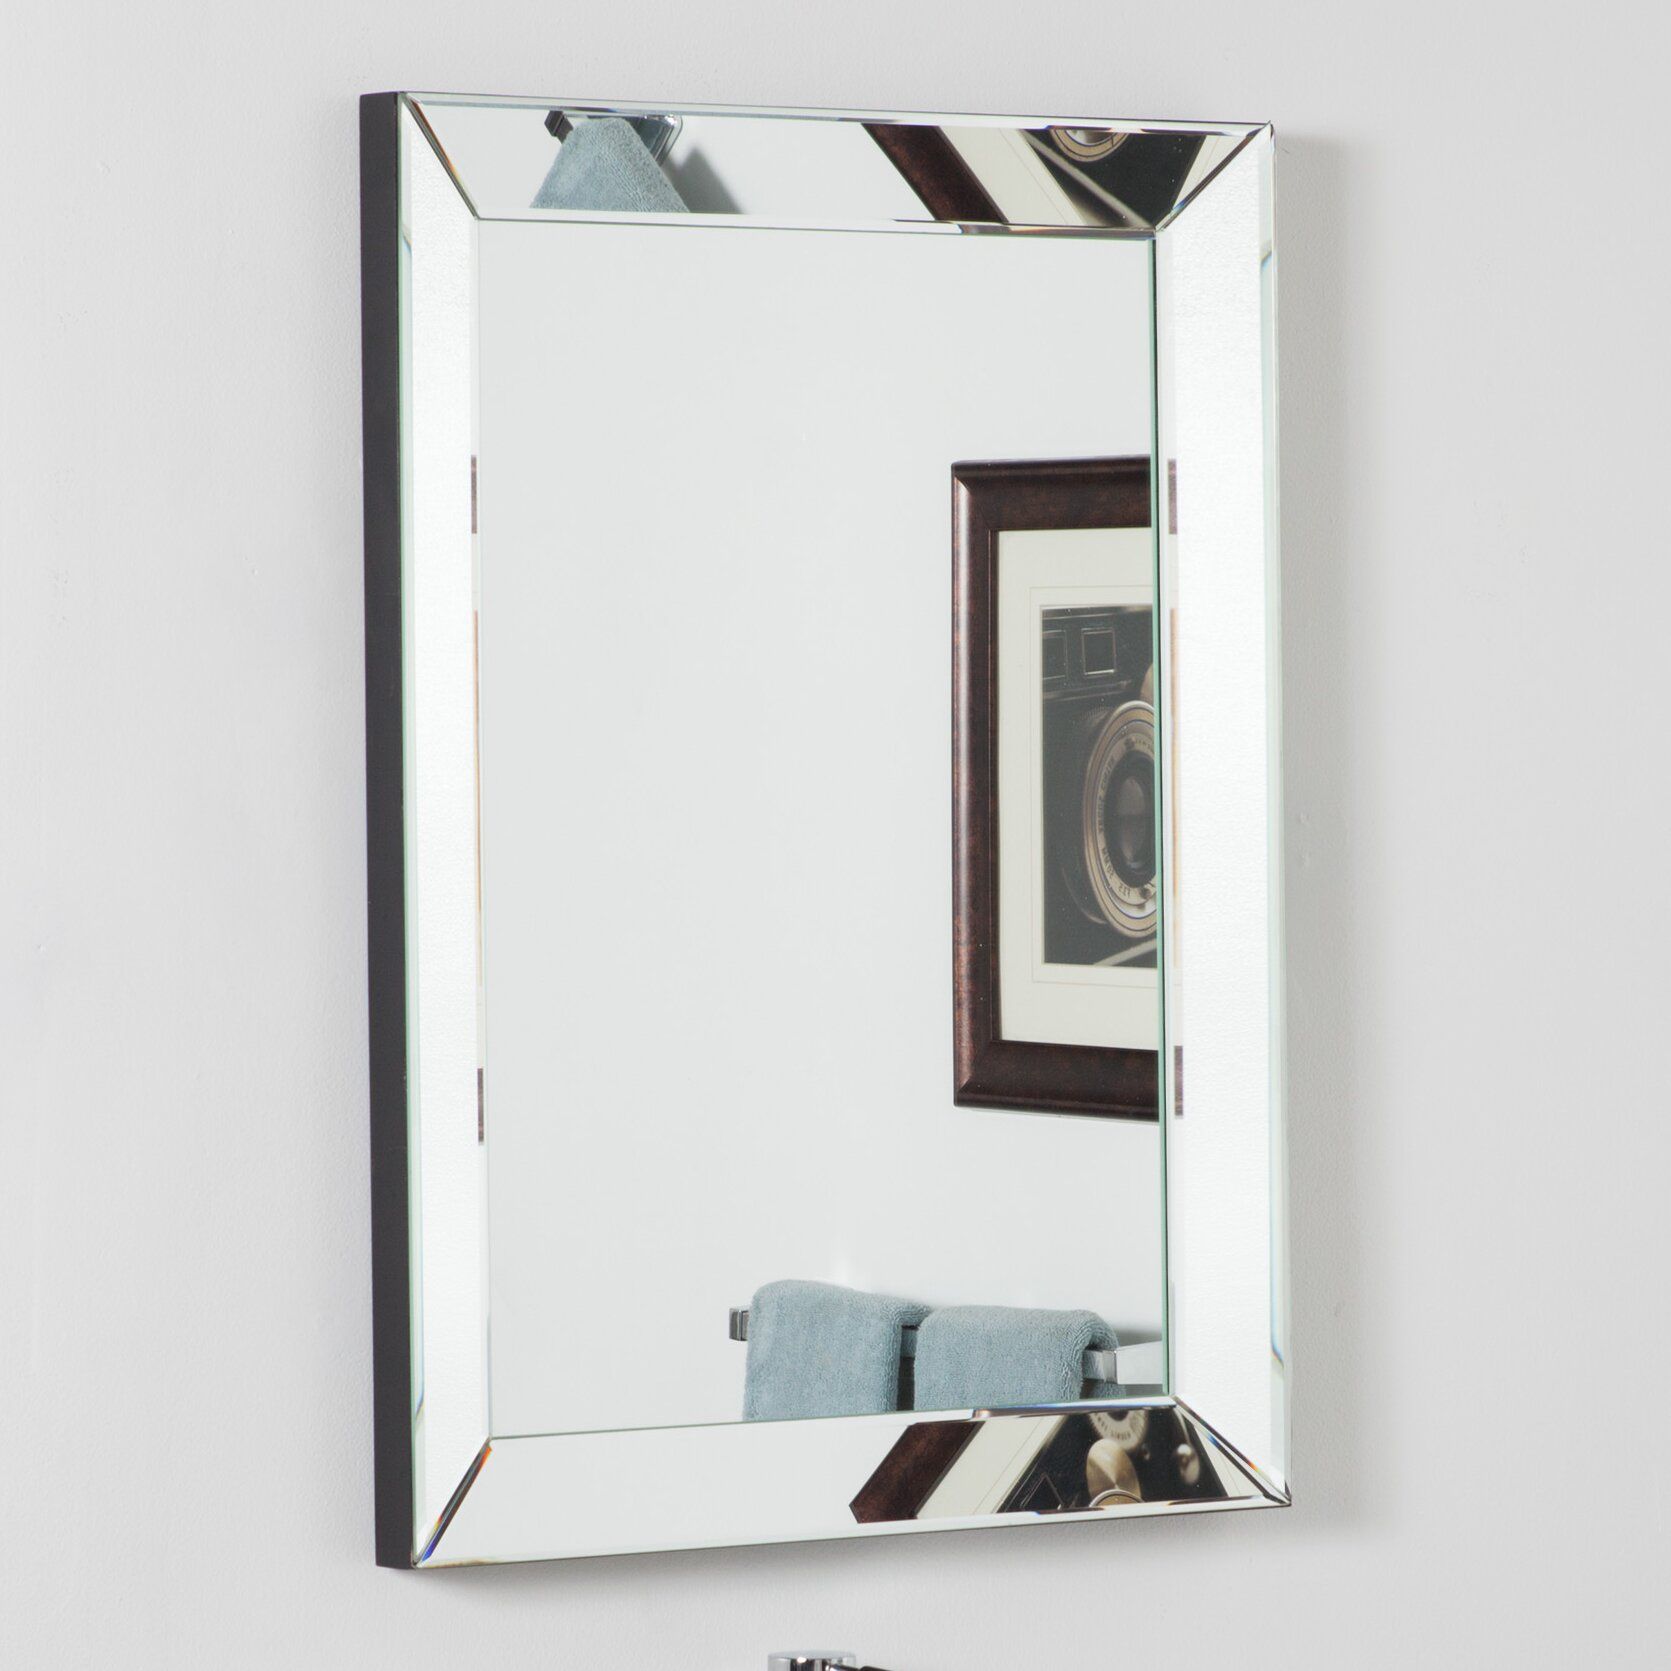 Decor Wonderland Mirror Framed Wall Mirror & Reviews | Wayfair Regarding Mirror Framed Bathroom Wall Mirrors (View 12 of 15)